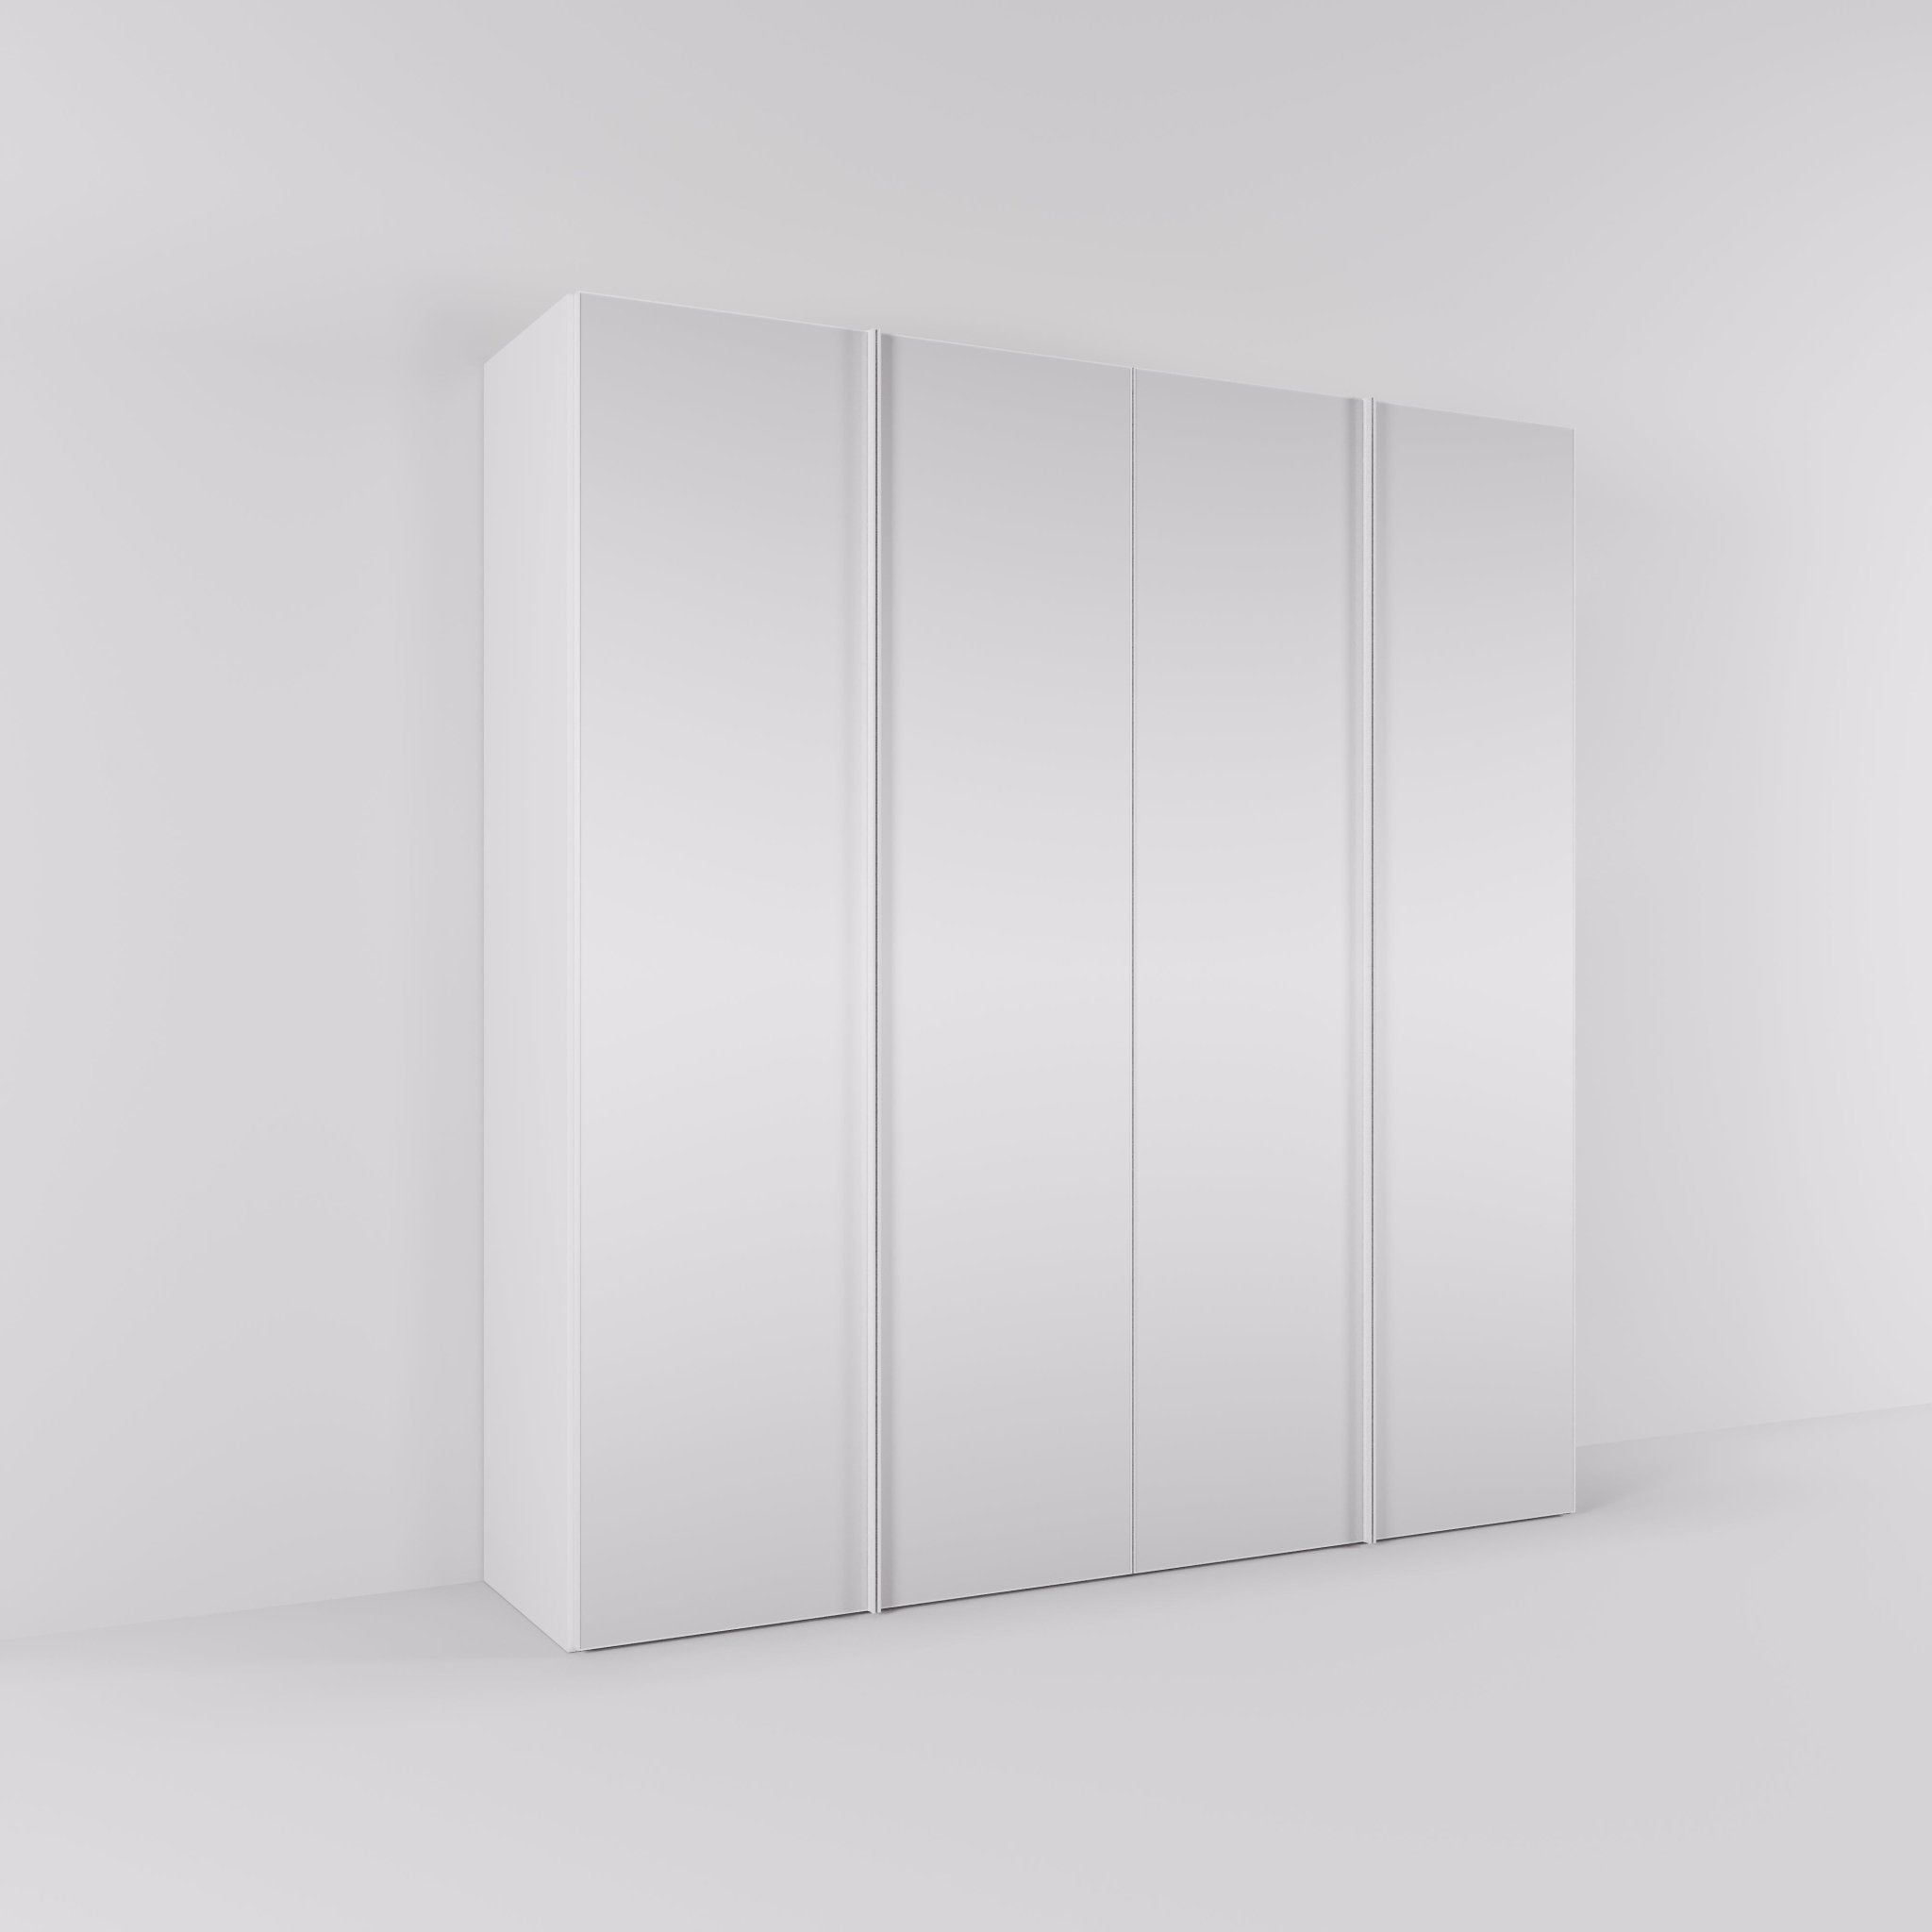 Kledingkast Levante in wit met spiegelglas | 203 cm breed - Matteo studio B.V.